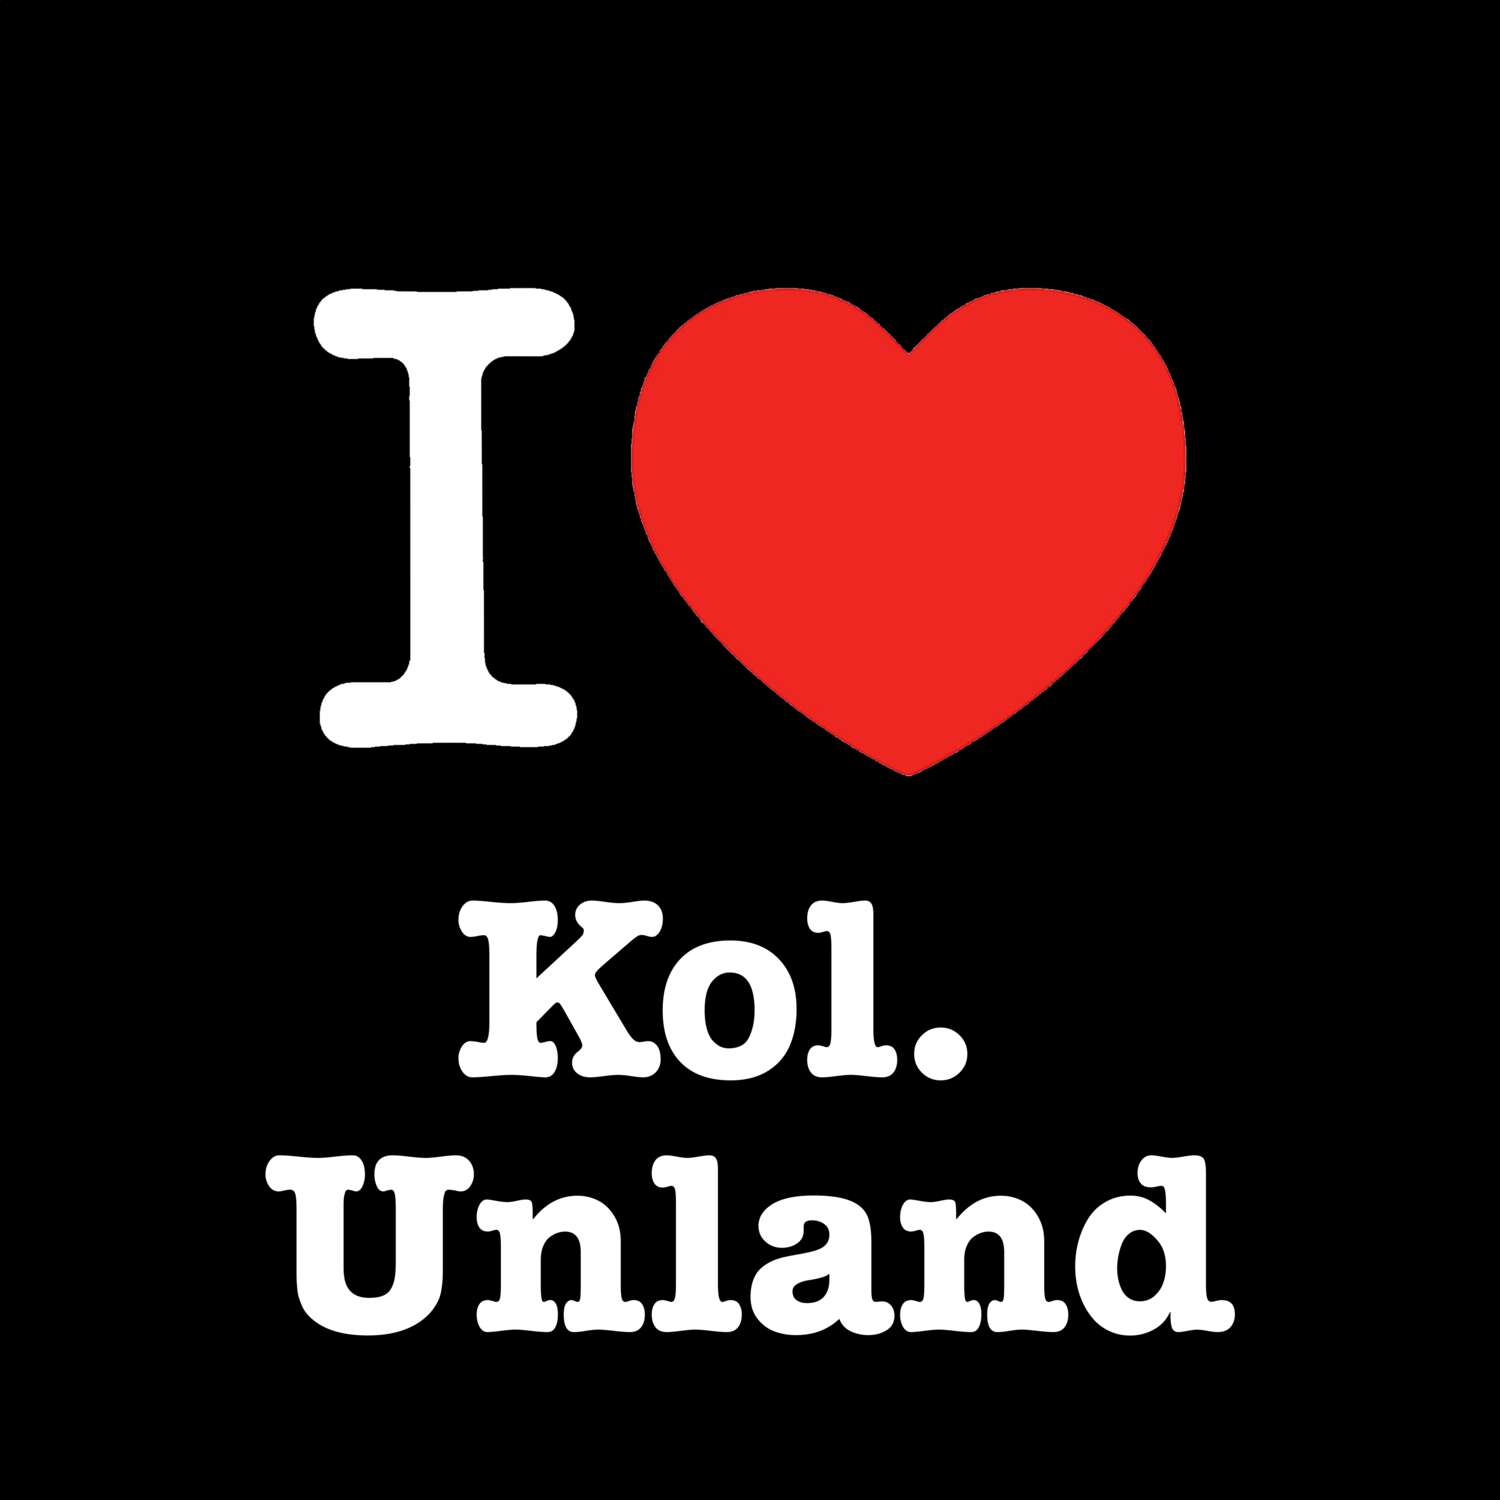 Kol. Unland T-Shirt »I love«